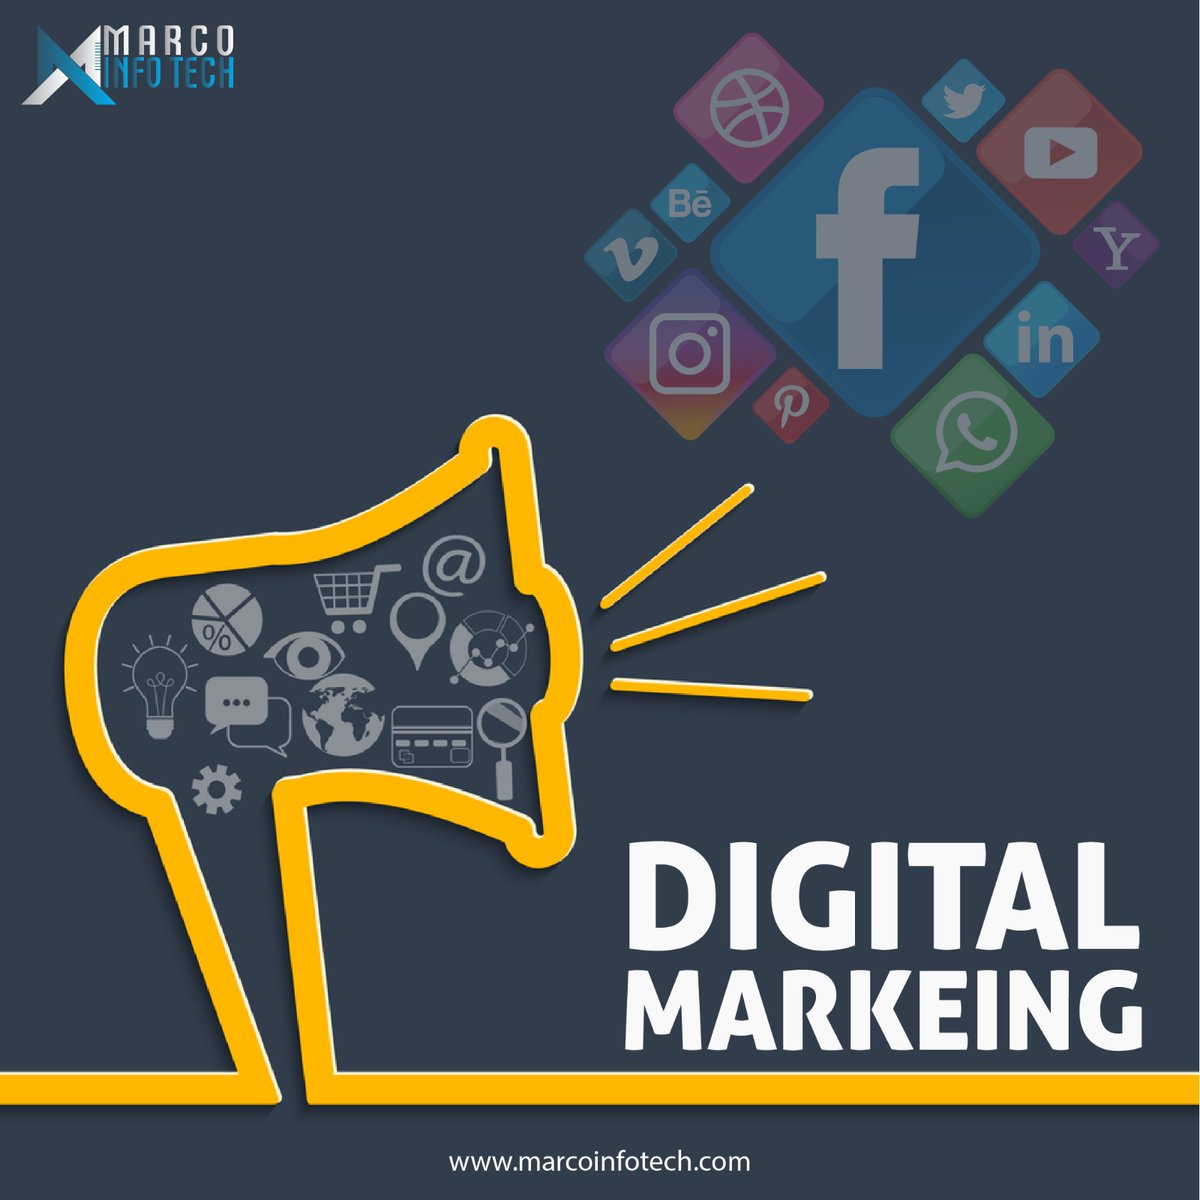 Digital dreams, tangible results. Join the success journey! 🚀💻 #DigitalDreams
.
.
#marcoinfotech #digitalmarketing #marketingadvice 🎡